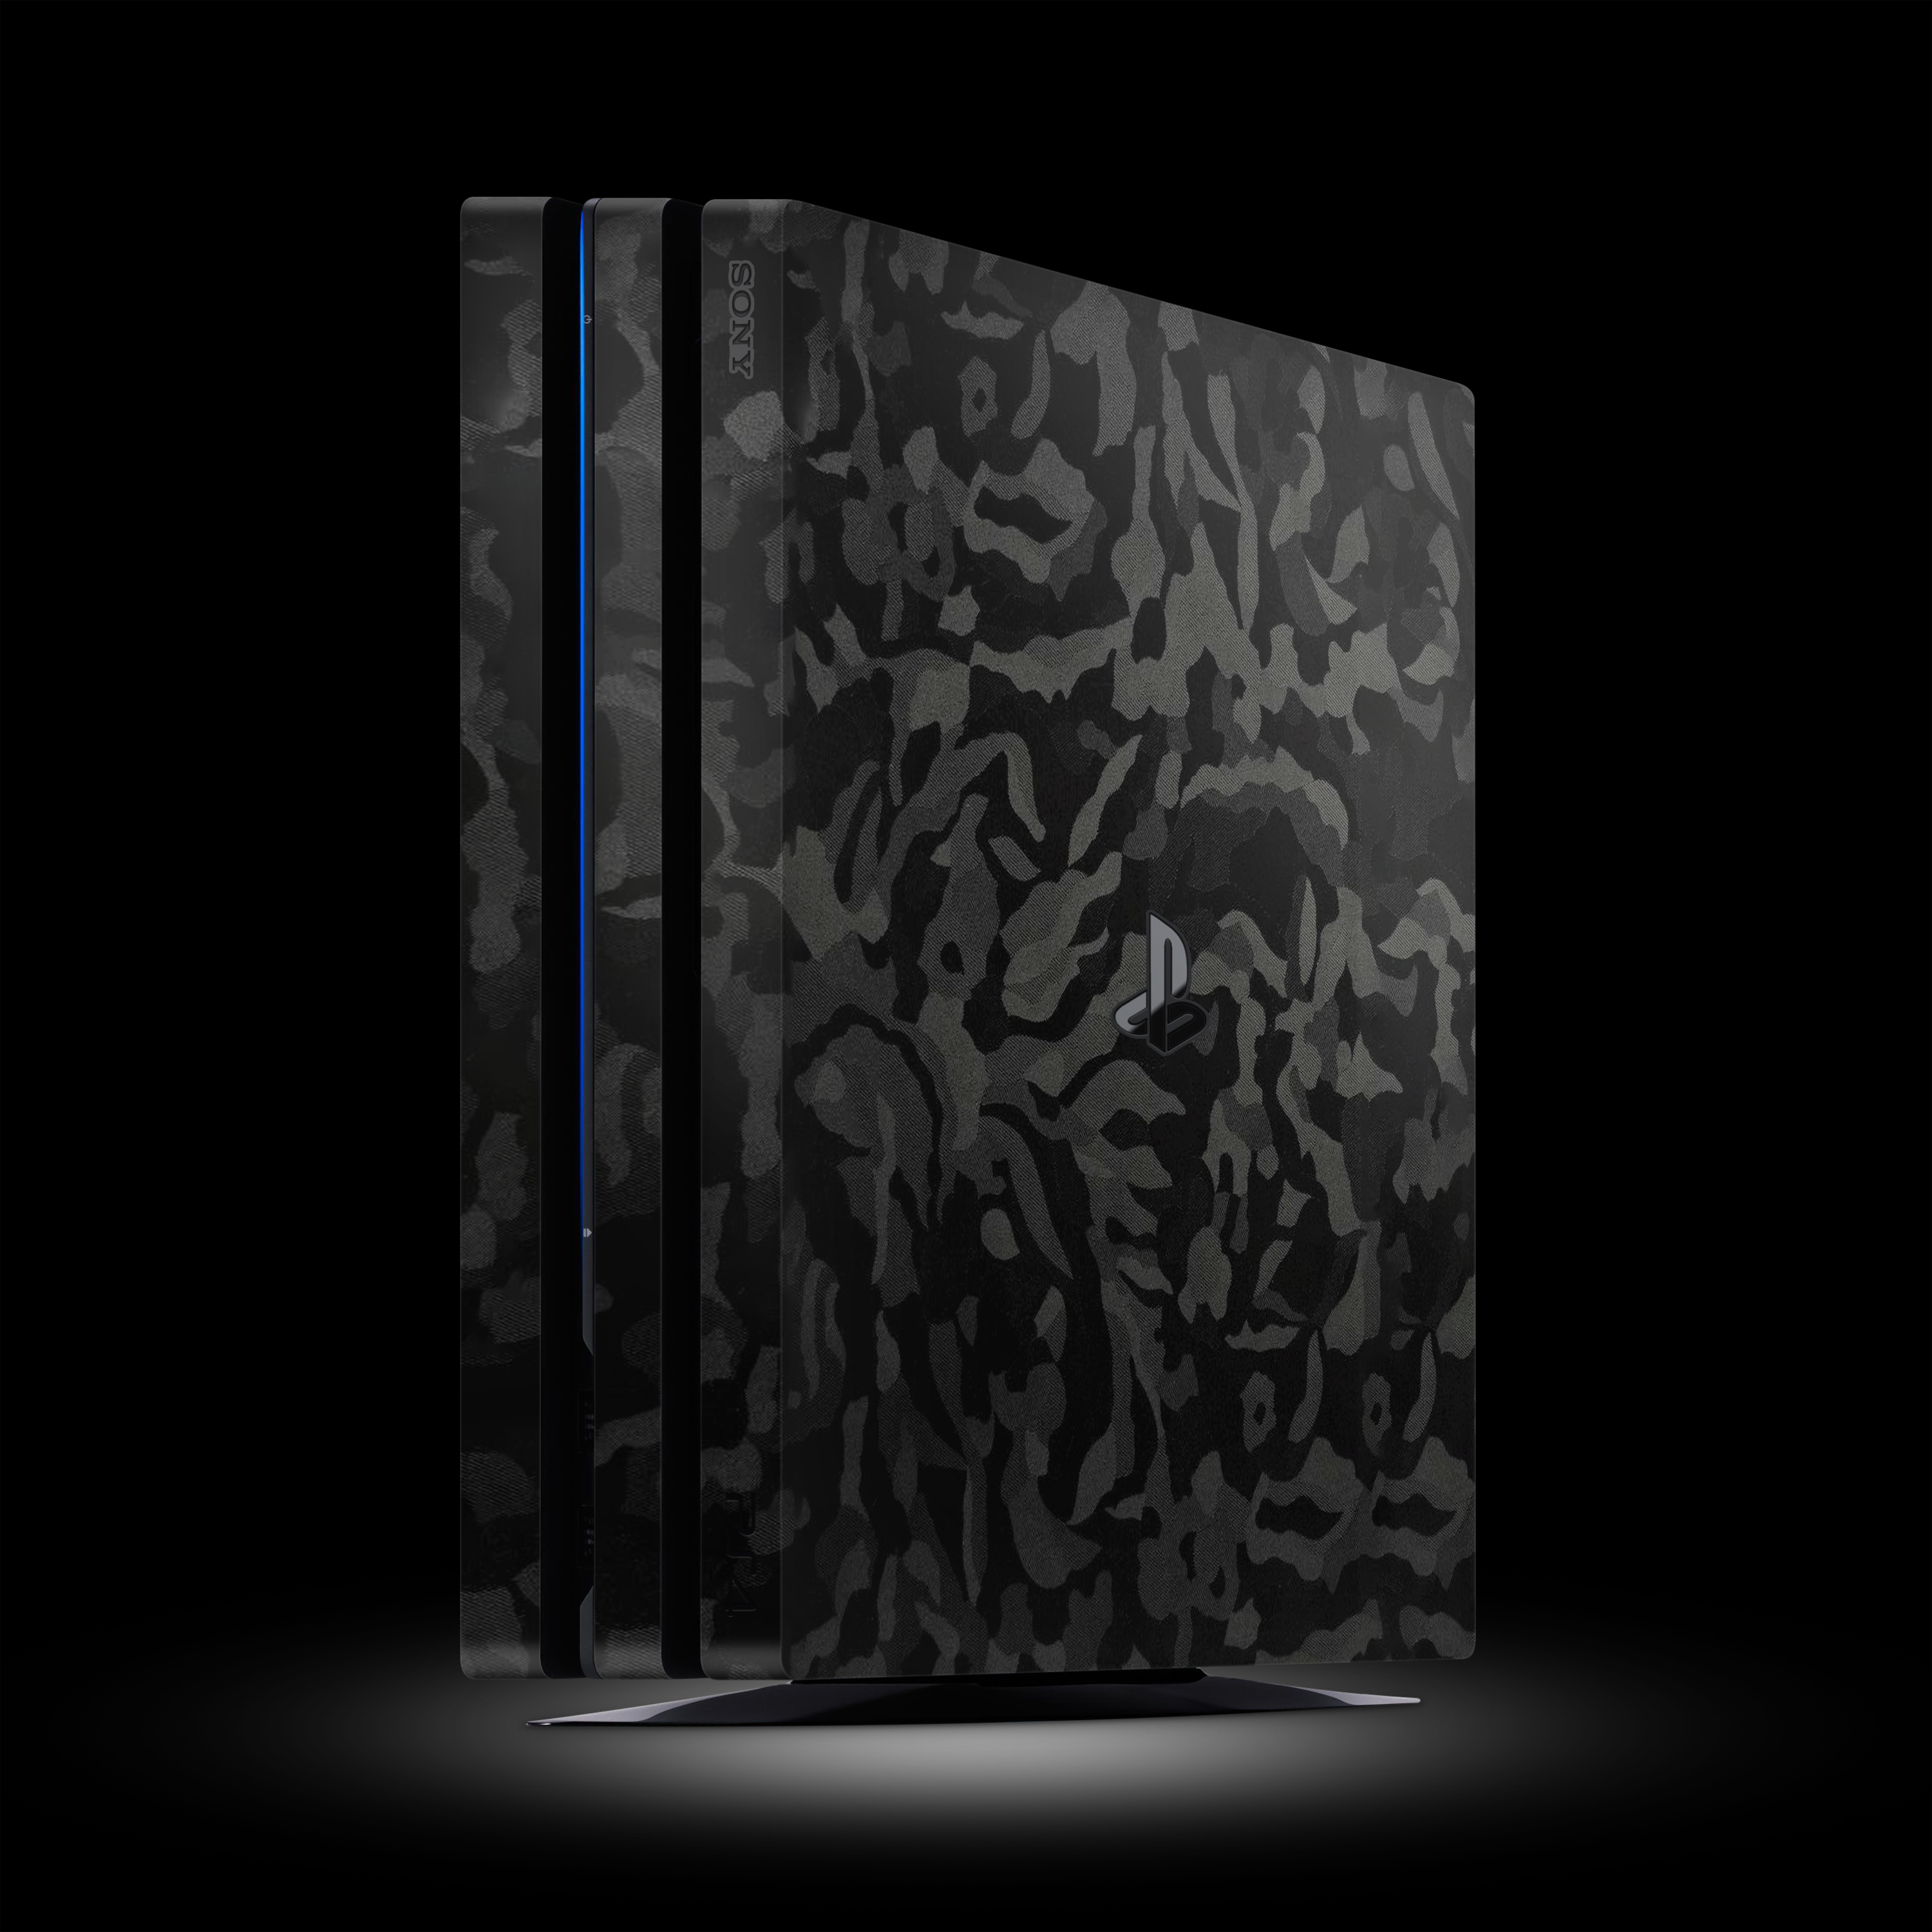 Black Camo (PlayStation 4 Pro Skin)